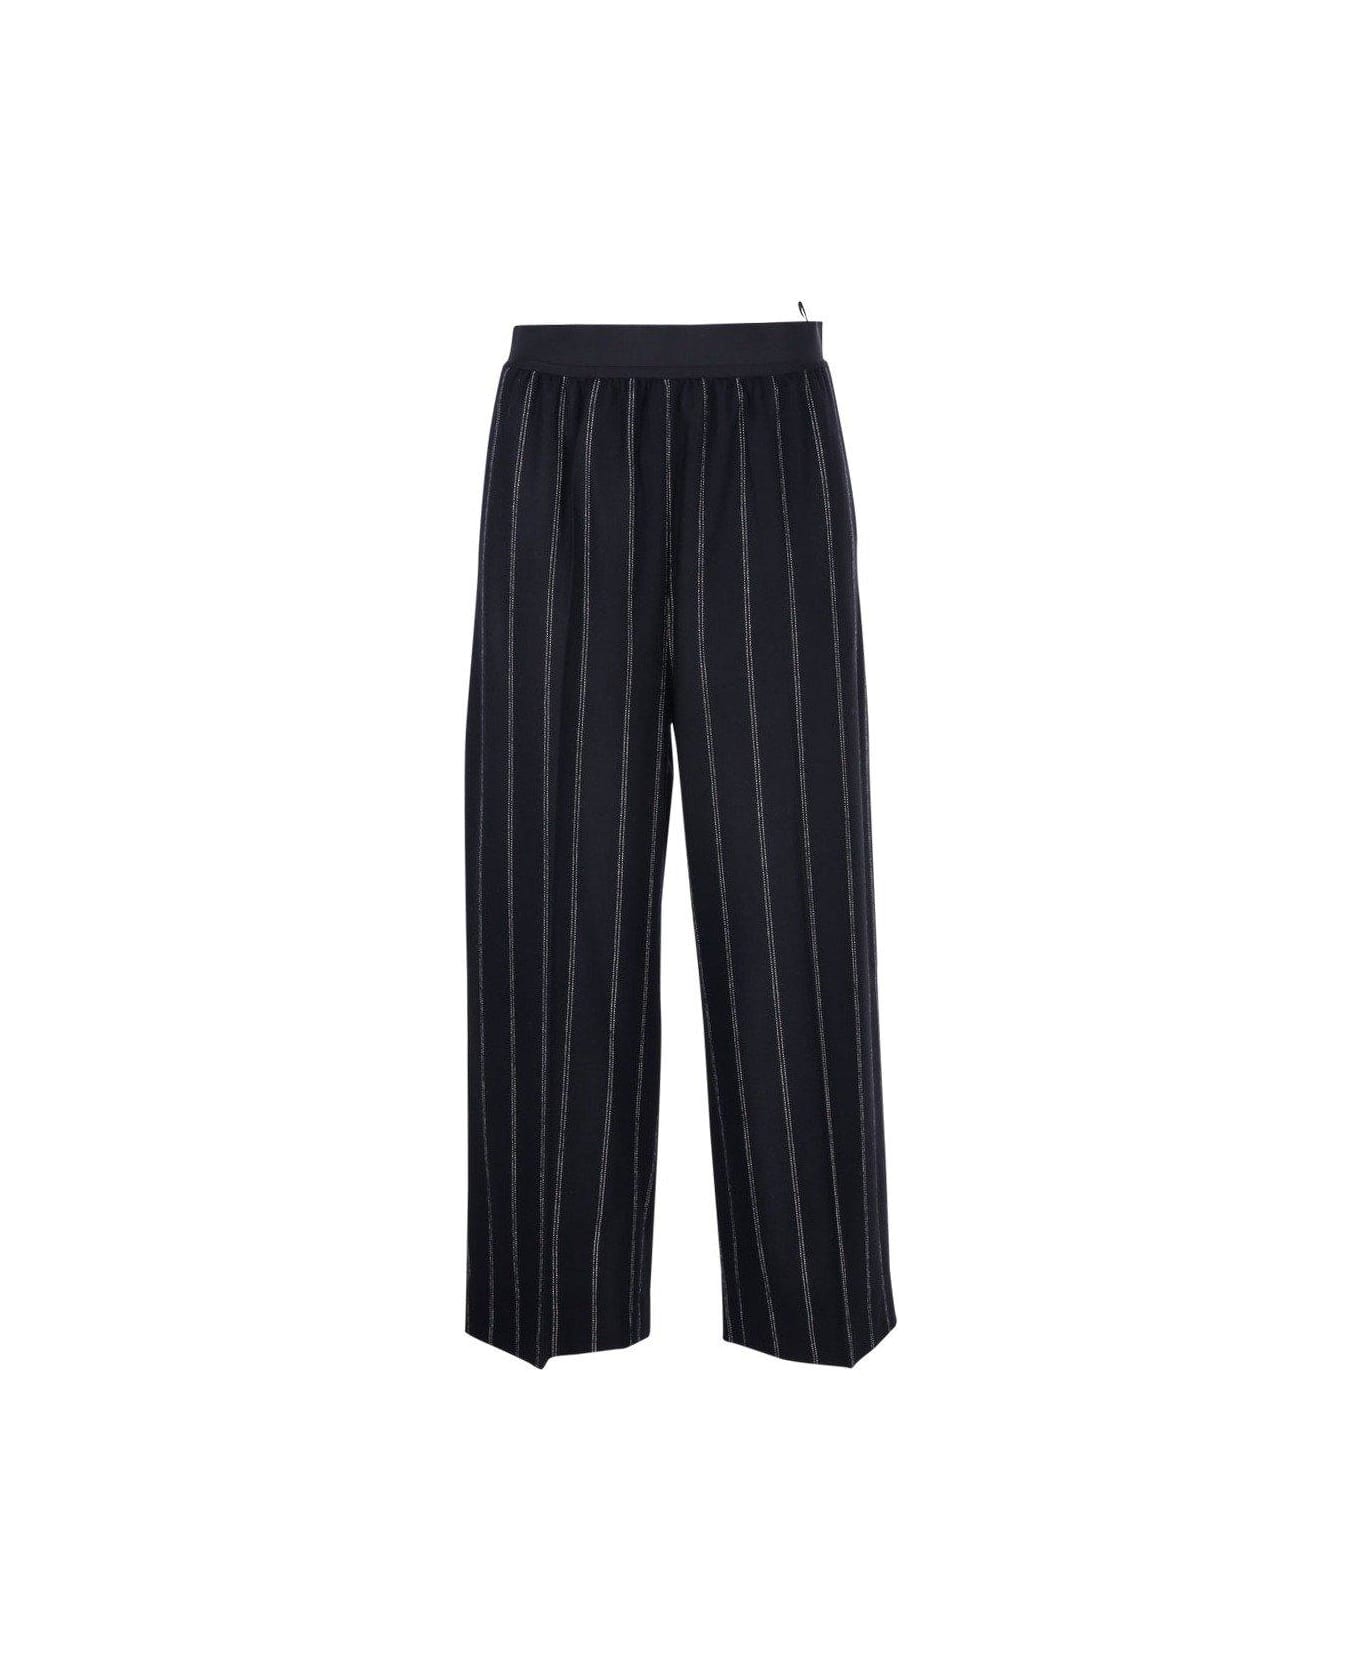 Stella McCartney Striped Cropped Pants - Black